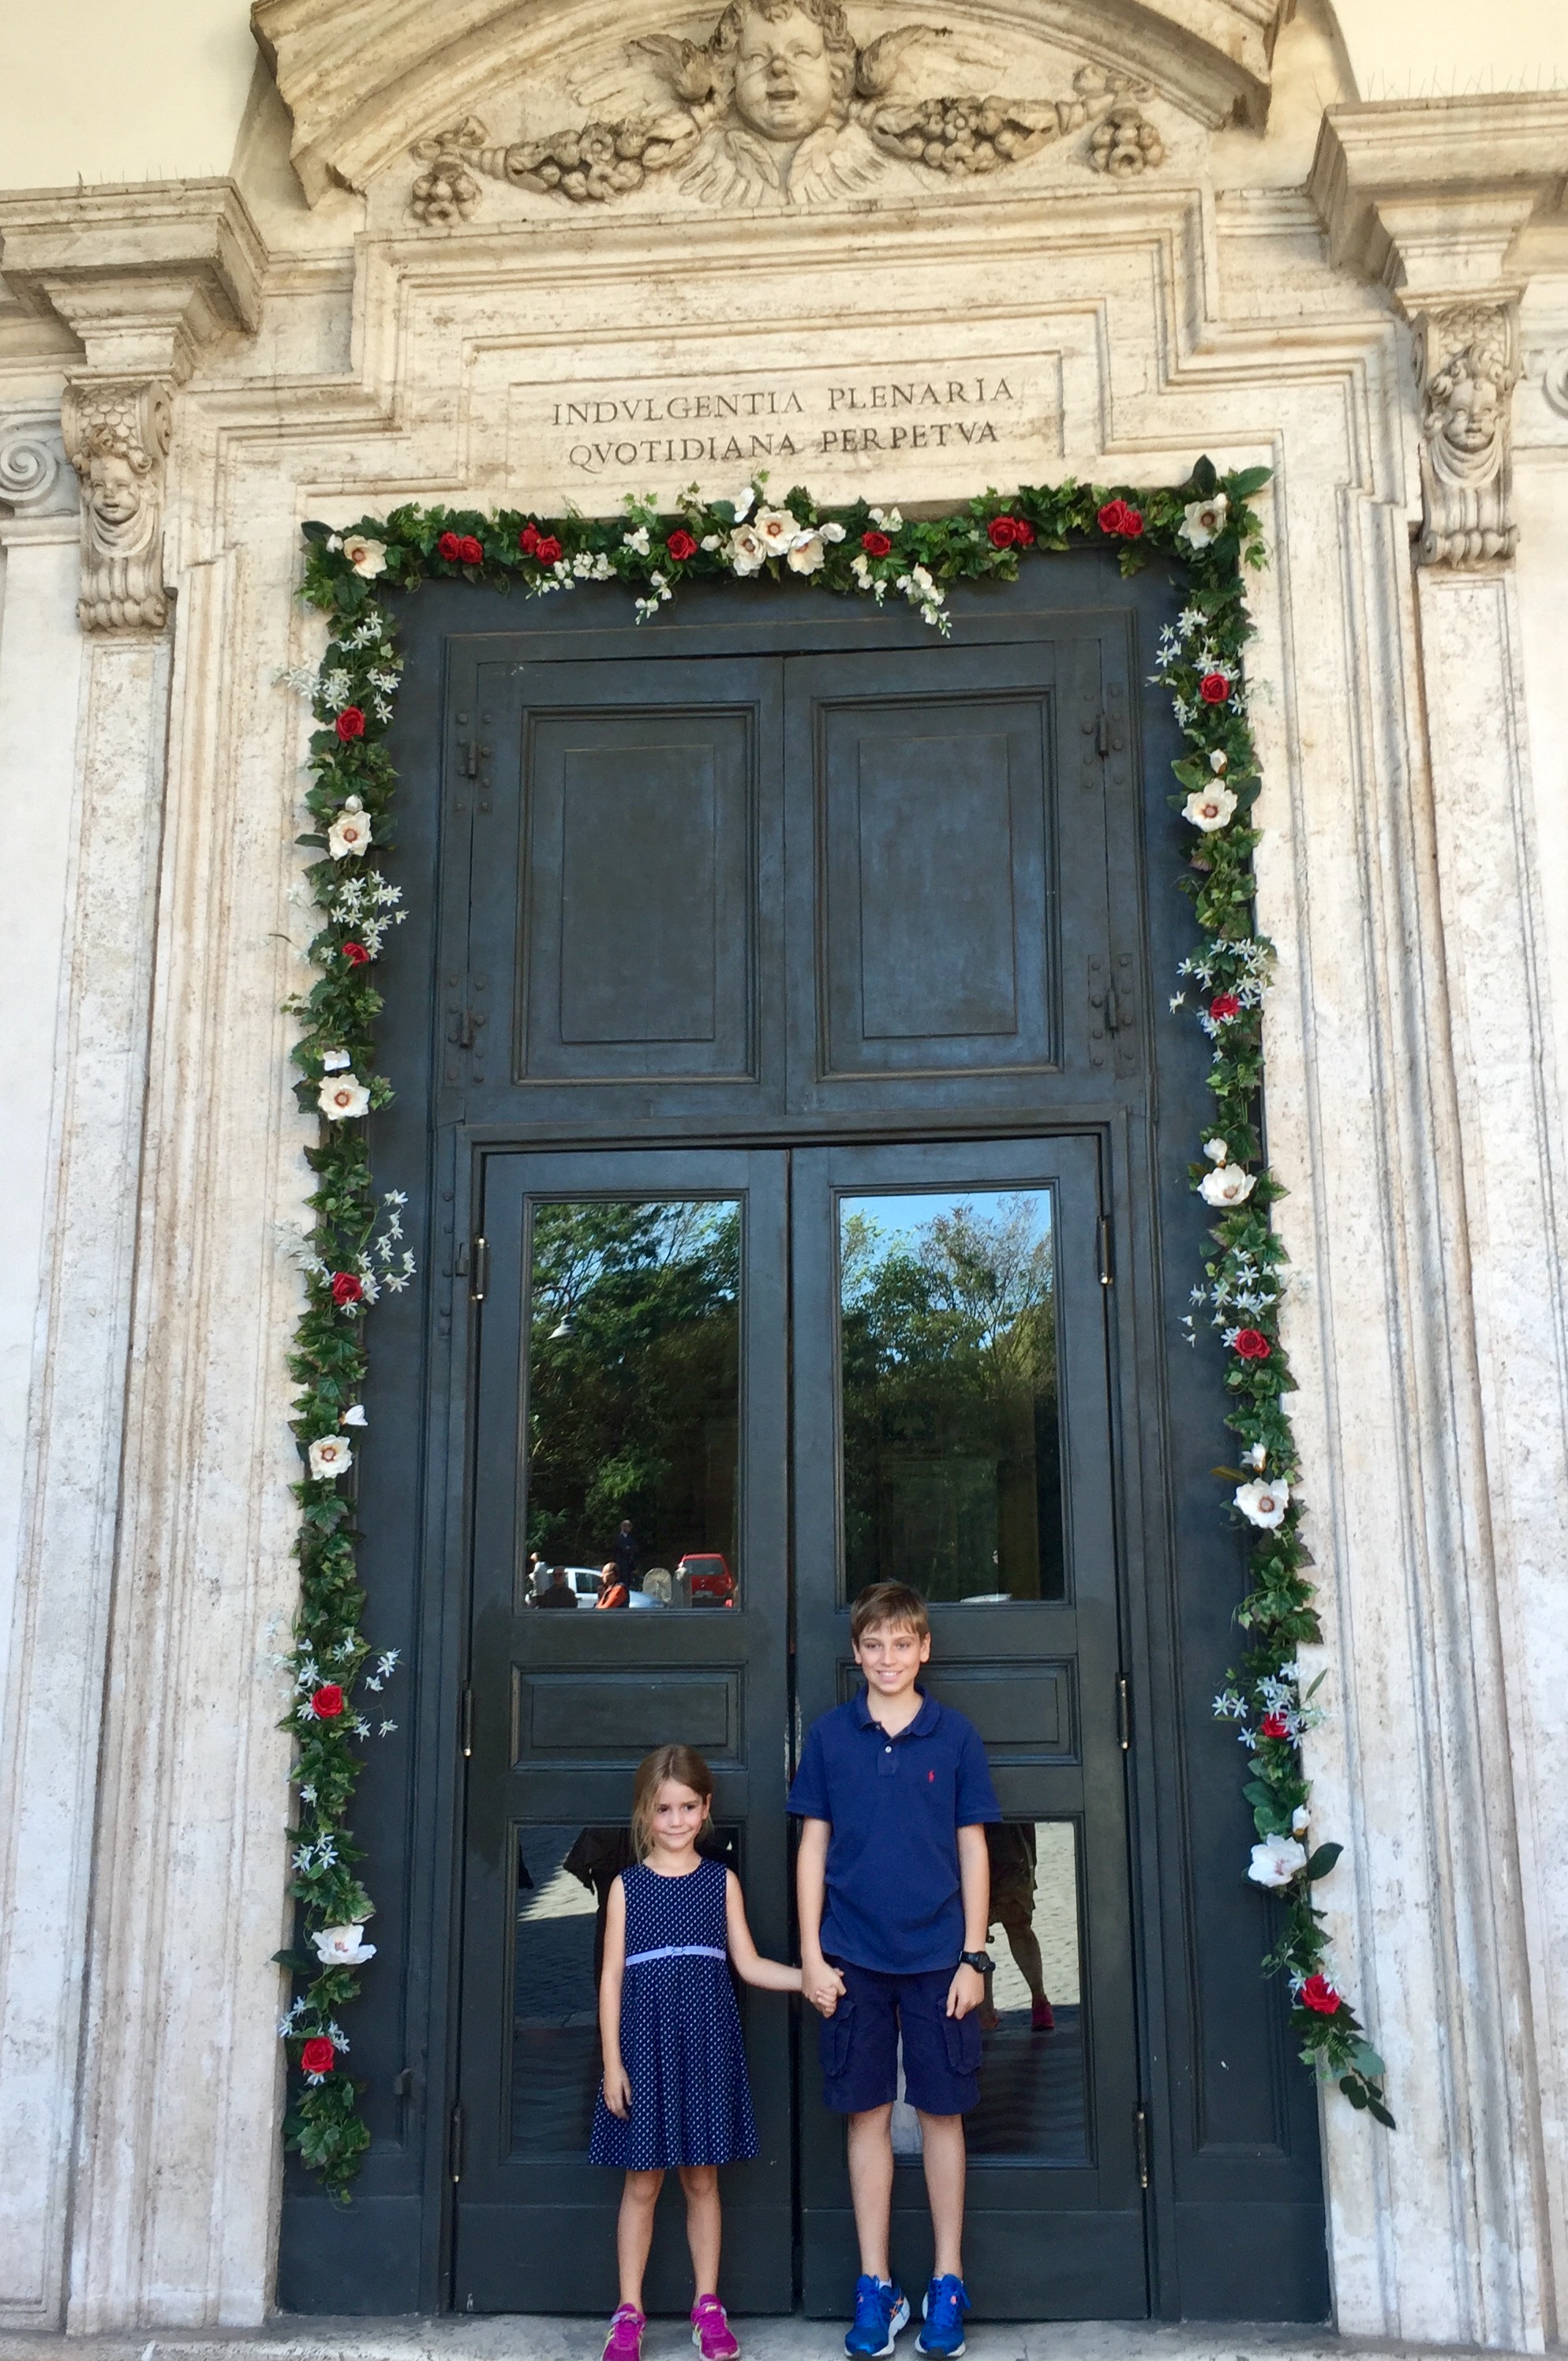 Outside the impressive doors of Basilica San Sebastián